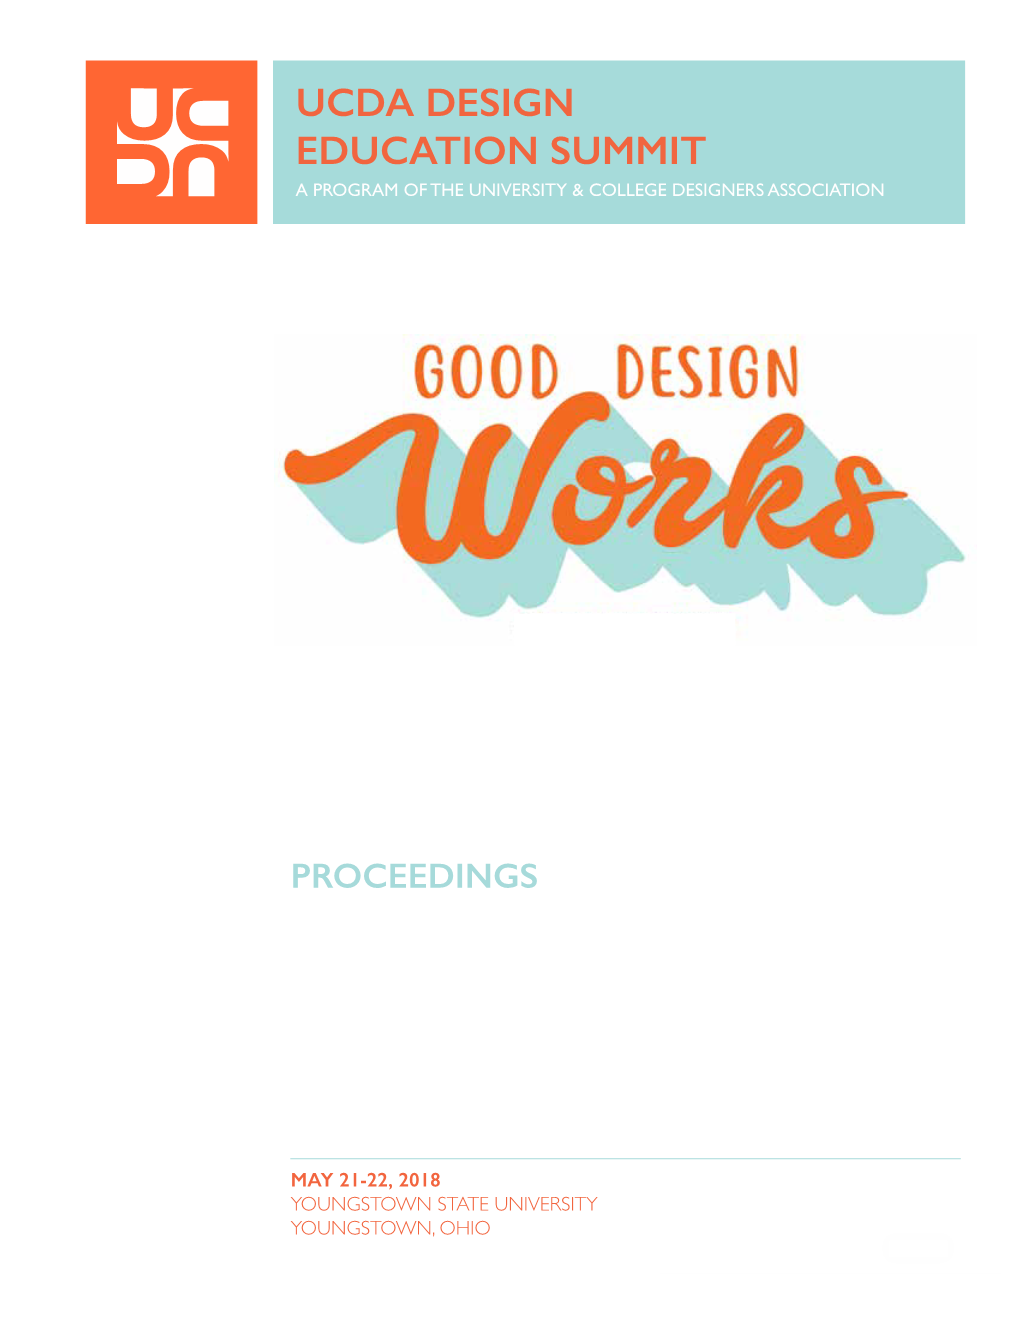 Ucda Design Education Summit a Program of the University & College Designers Association